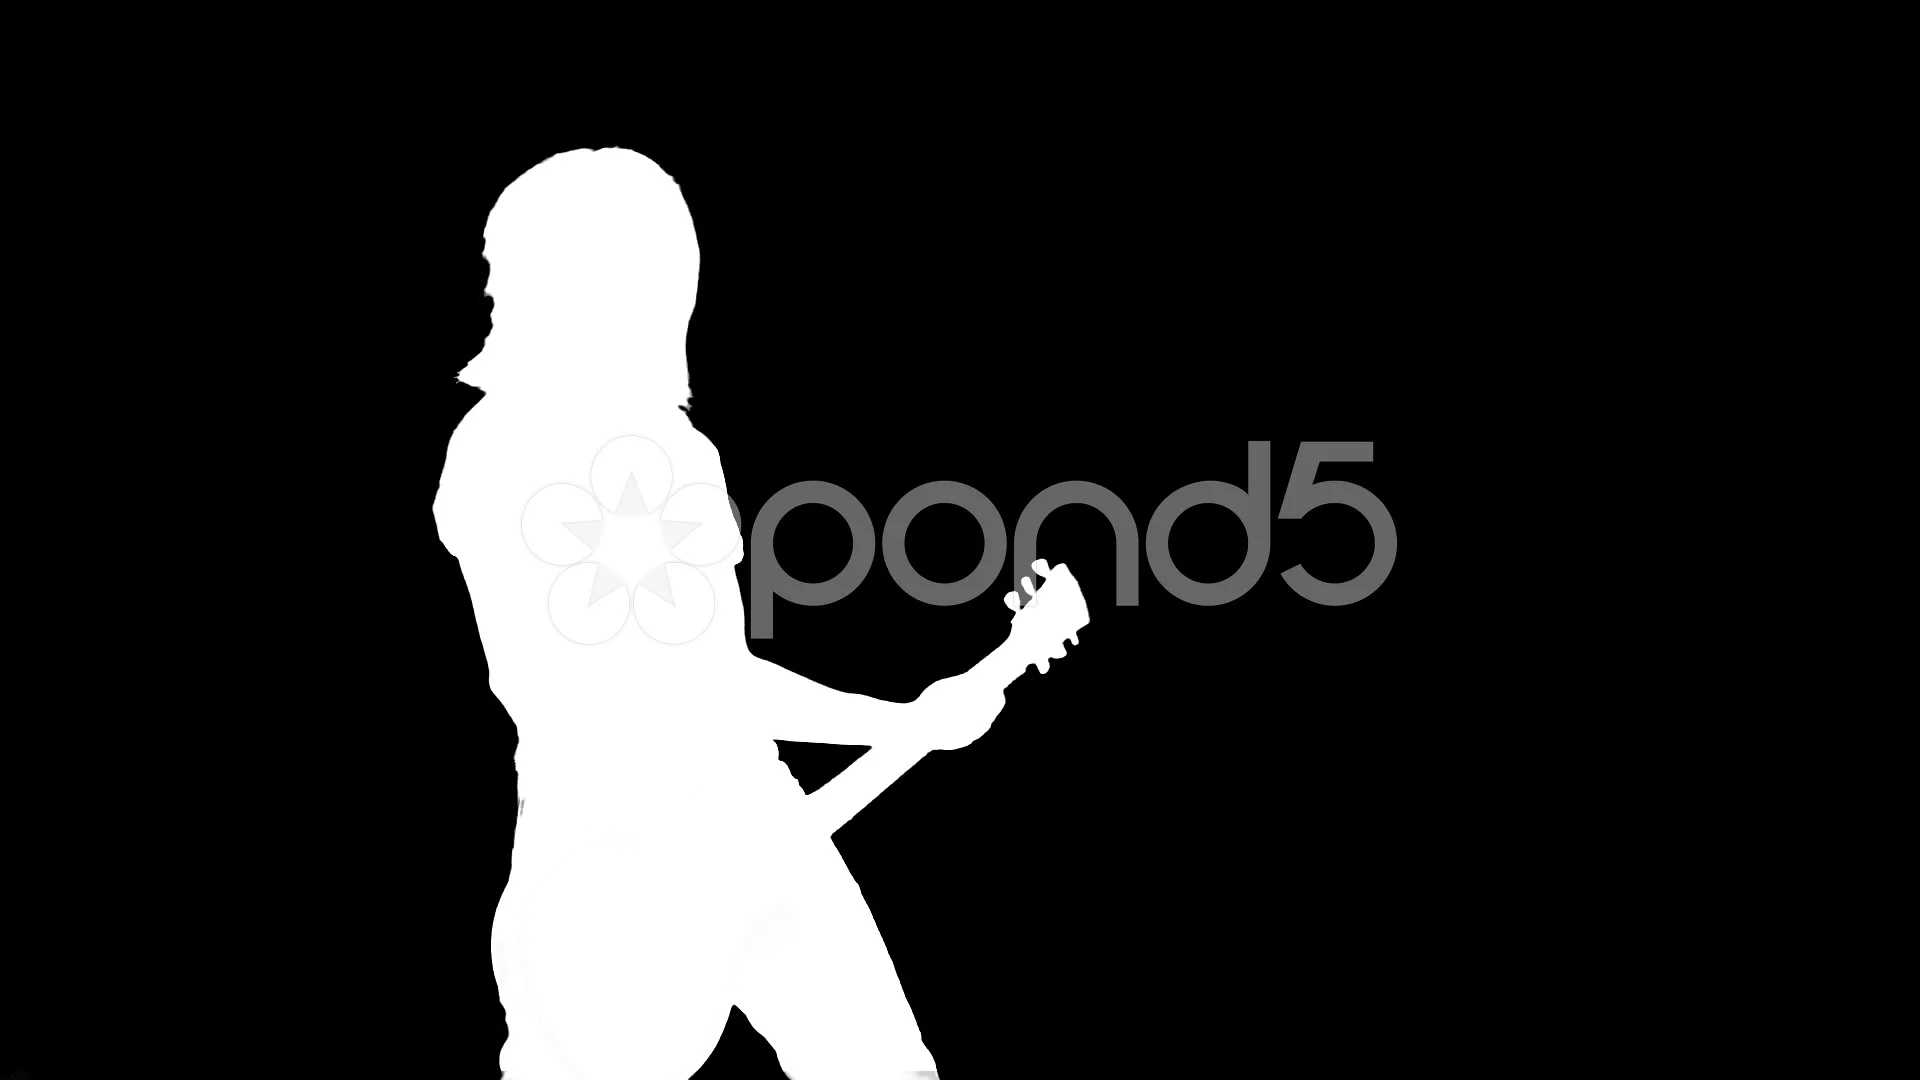 rock star silhouette